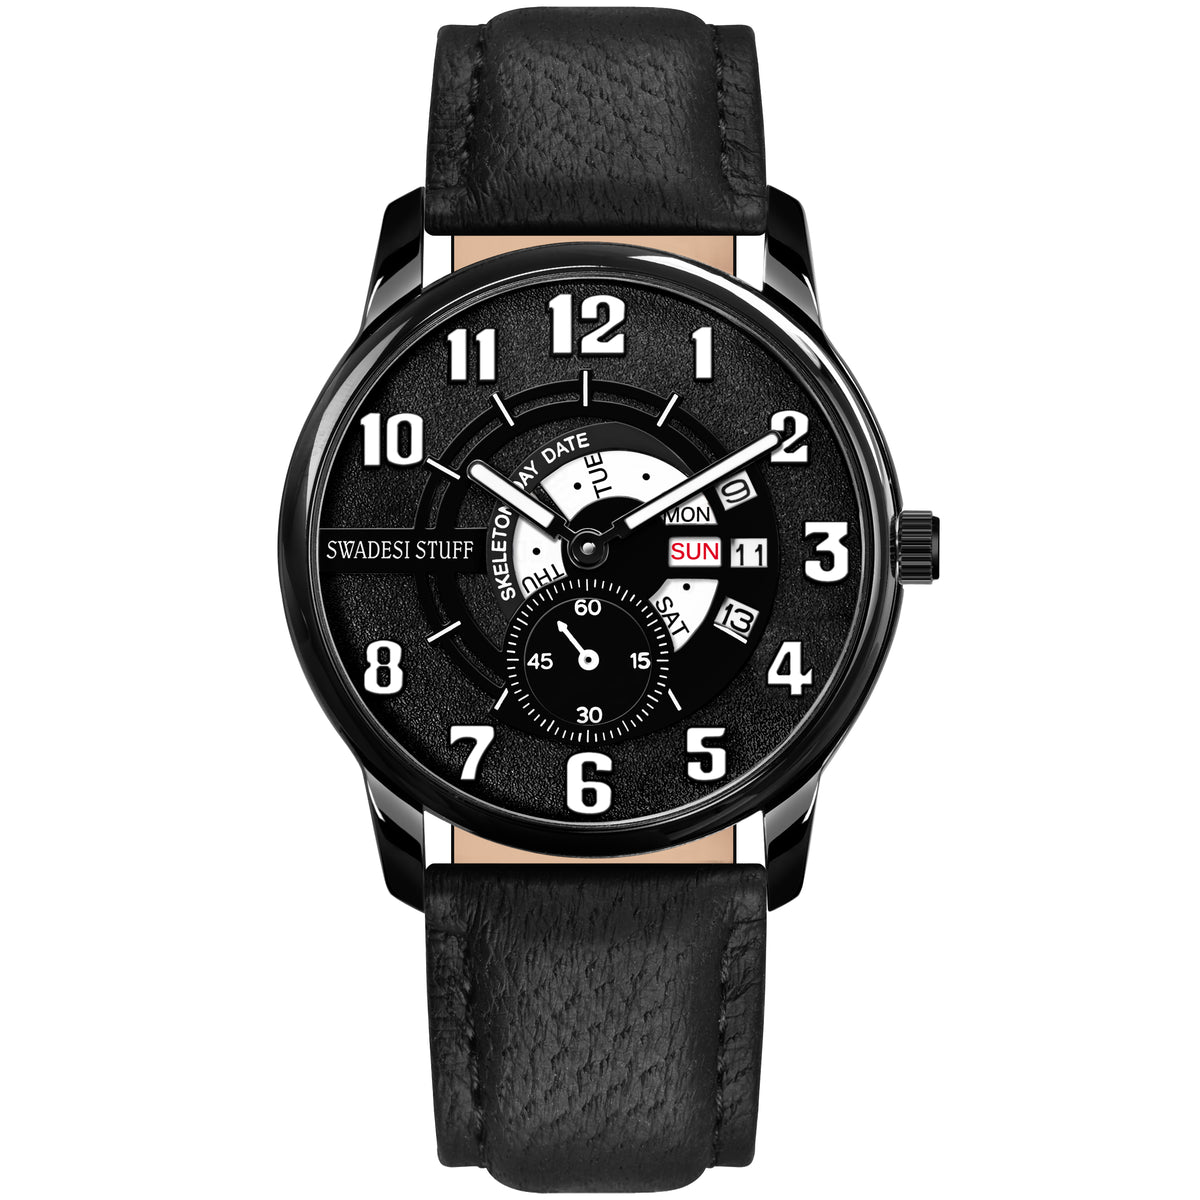 Relics Black - Premium & Luxurious Watch For Men